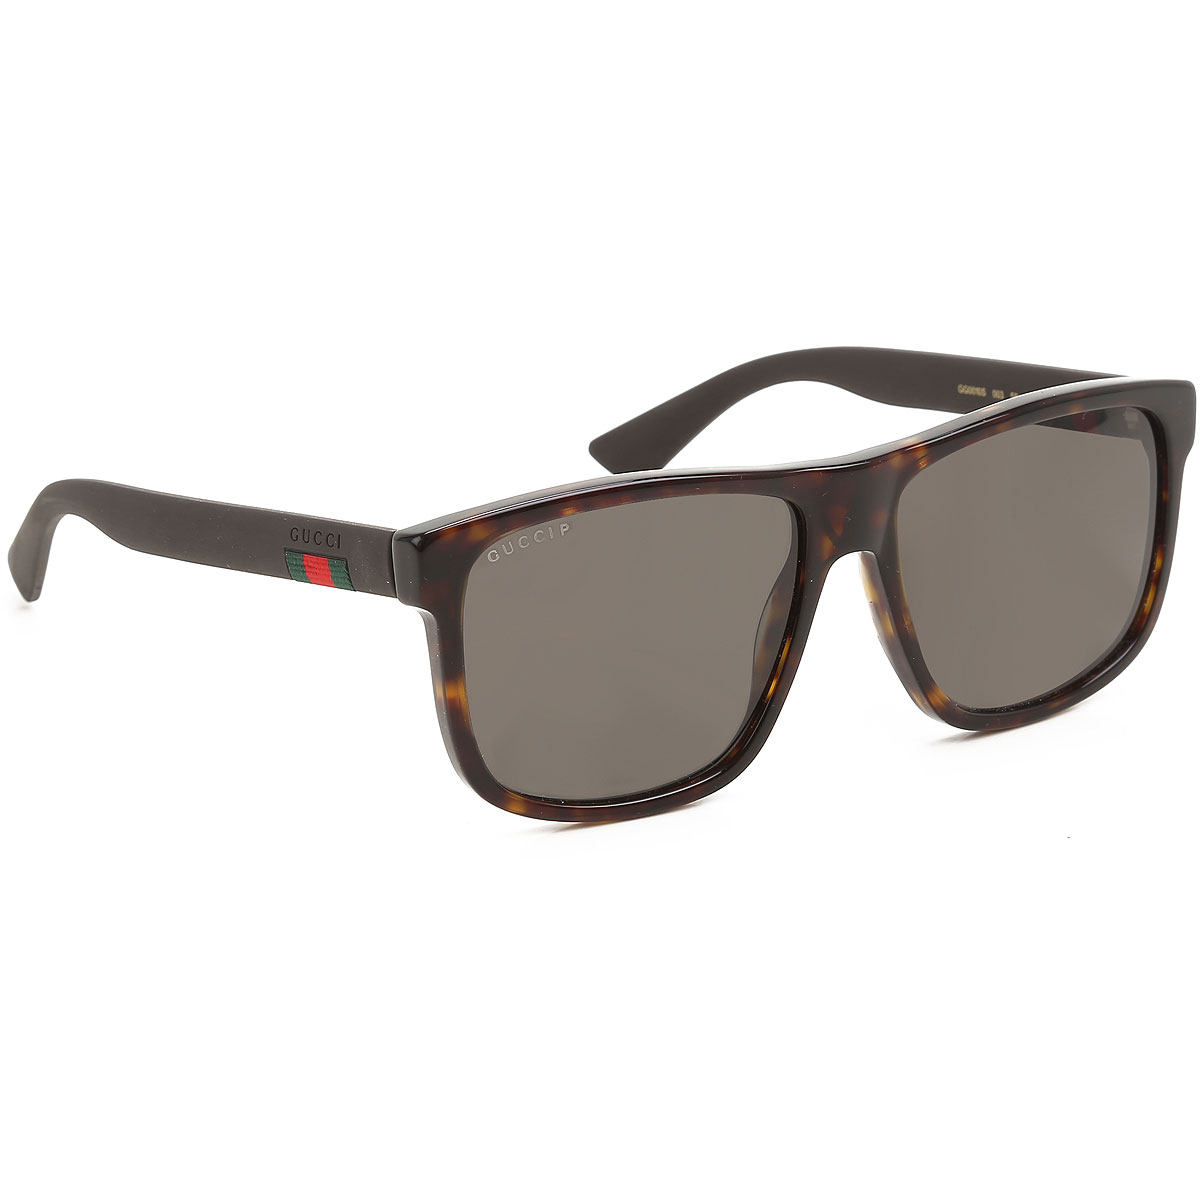 Sunglasses Gucci, Style code: gg0010s-003-N114